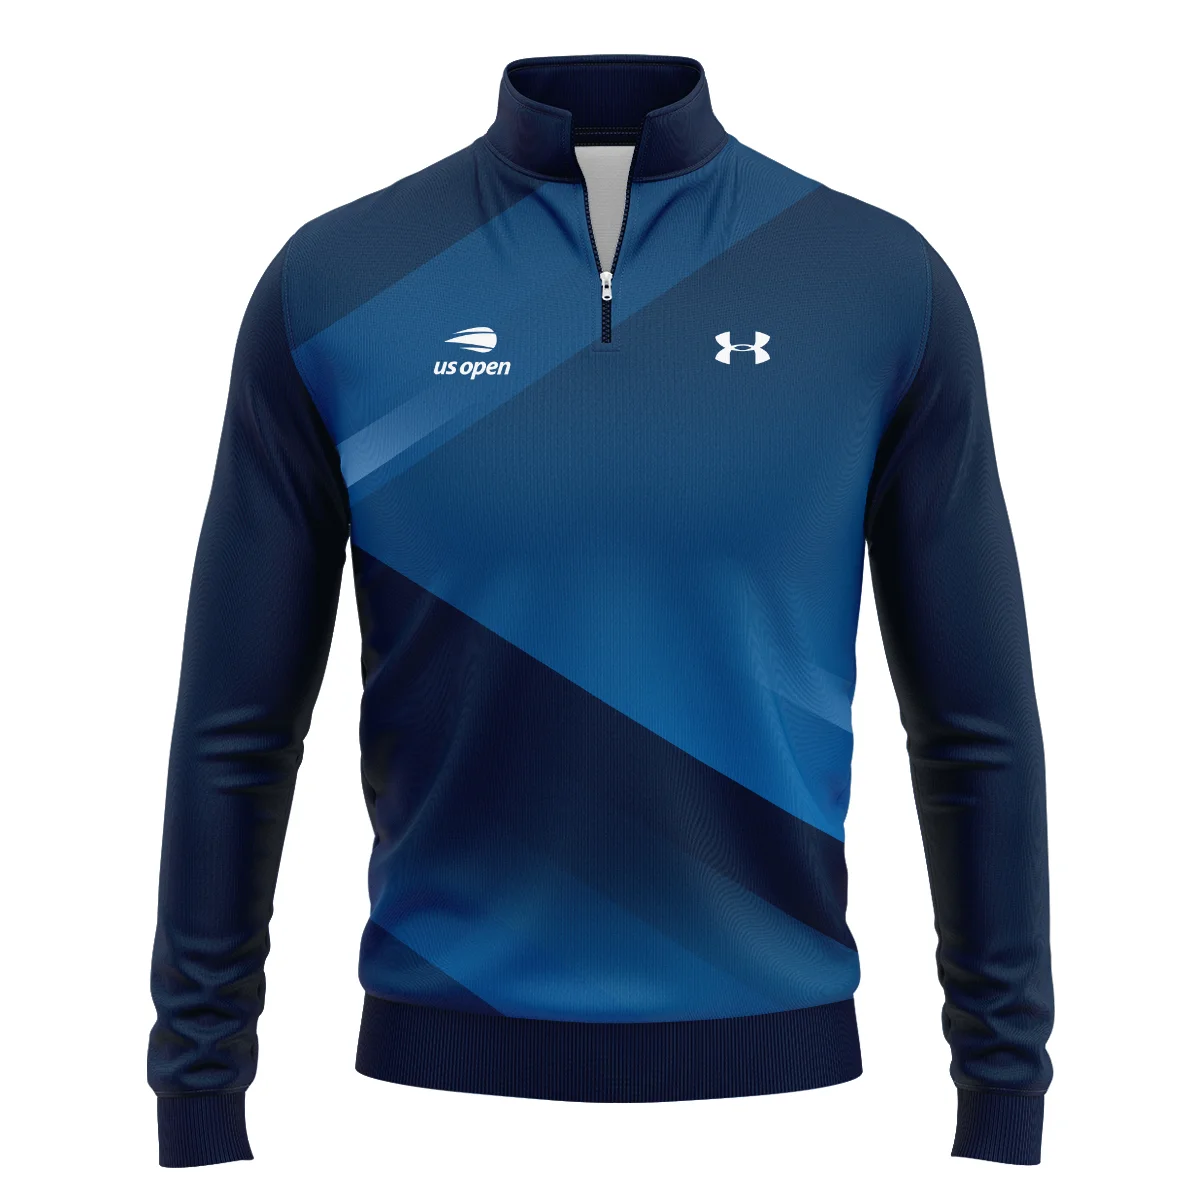 US Open Tennis Champions Dark Blue Background Under Armour Polo Shirt Mandarin Collar Polo Shirt